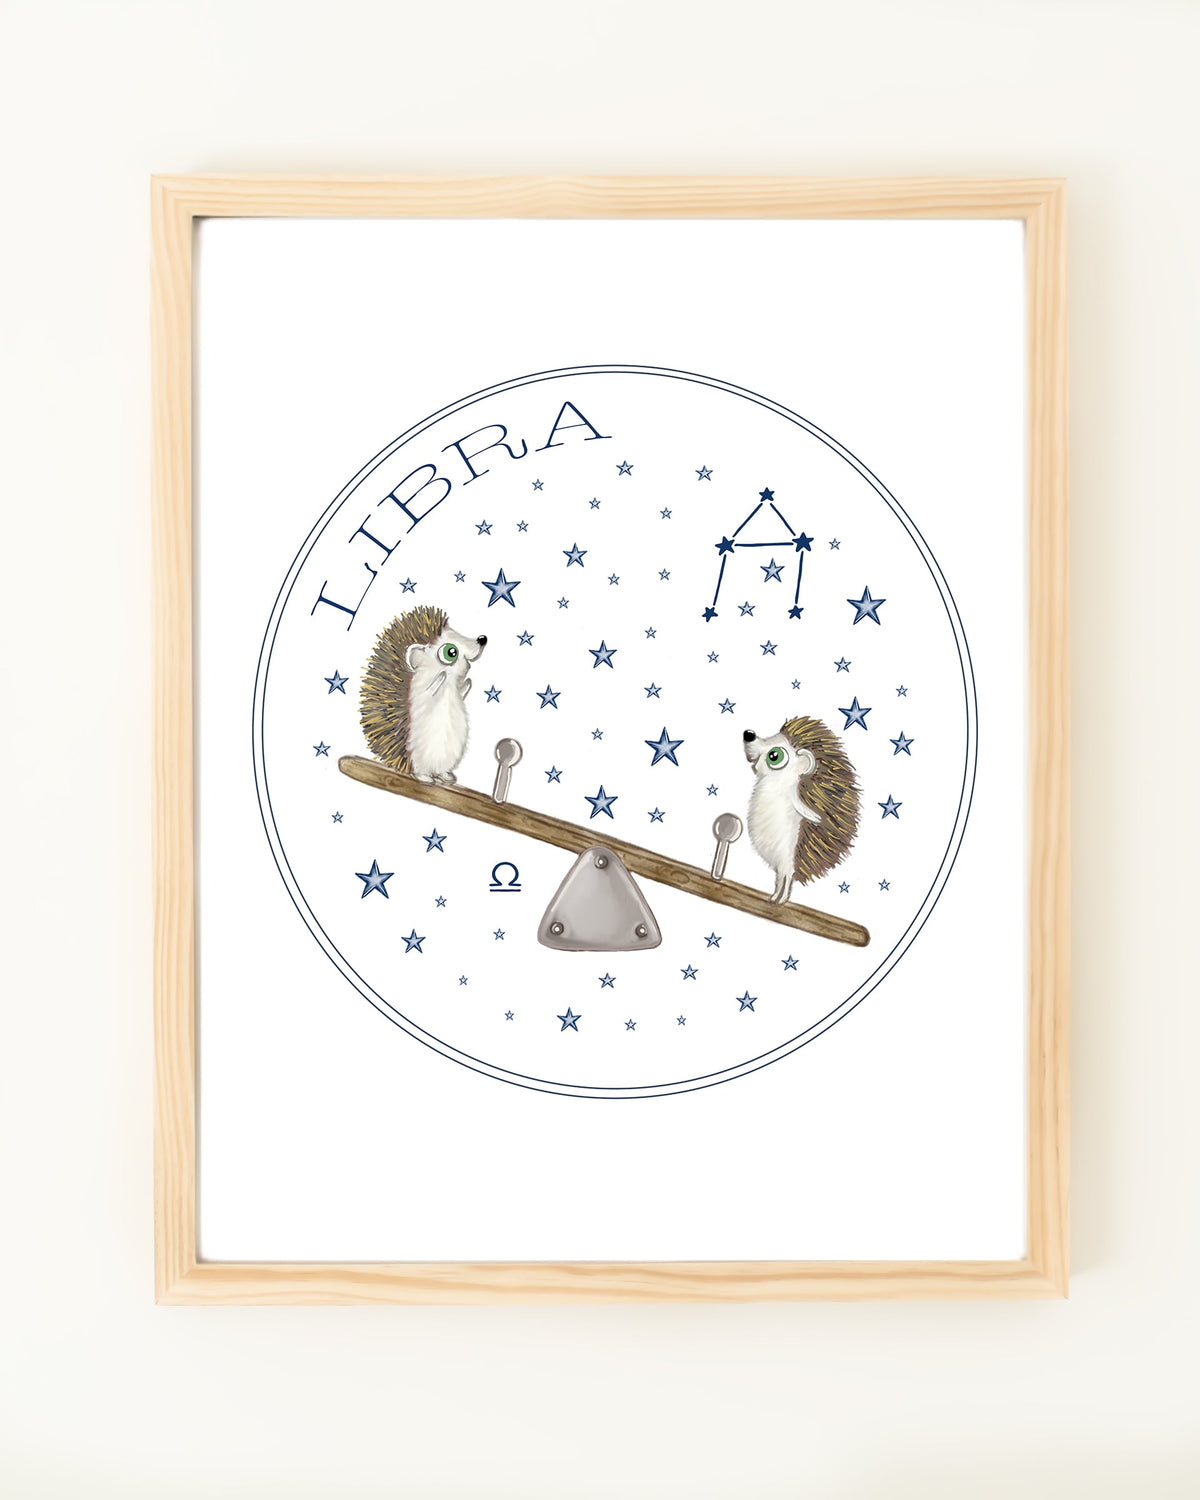 Framed hand drawn stars zodiac nursery decor wall art poster Libra cute baby hedgehogs on seesaw